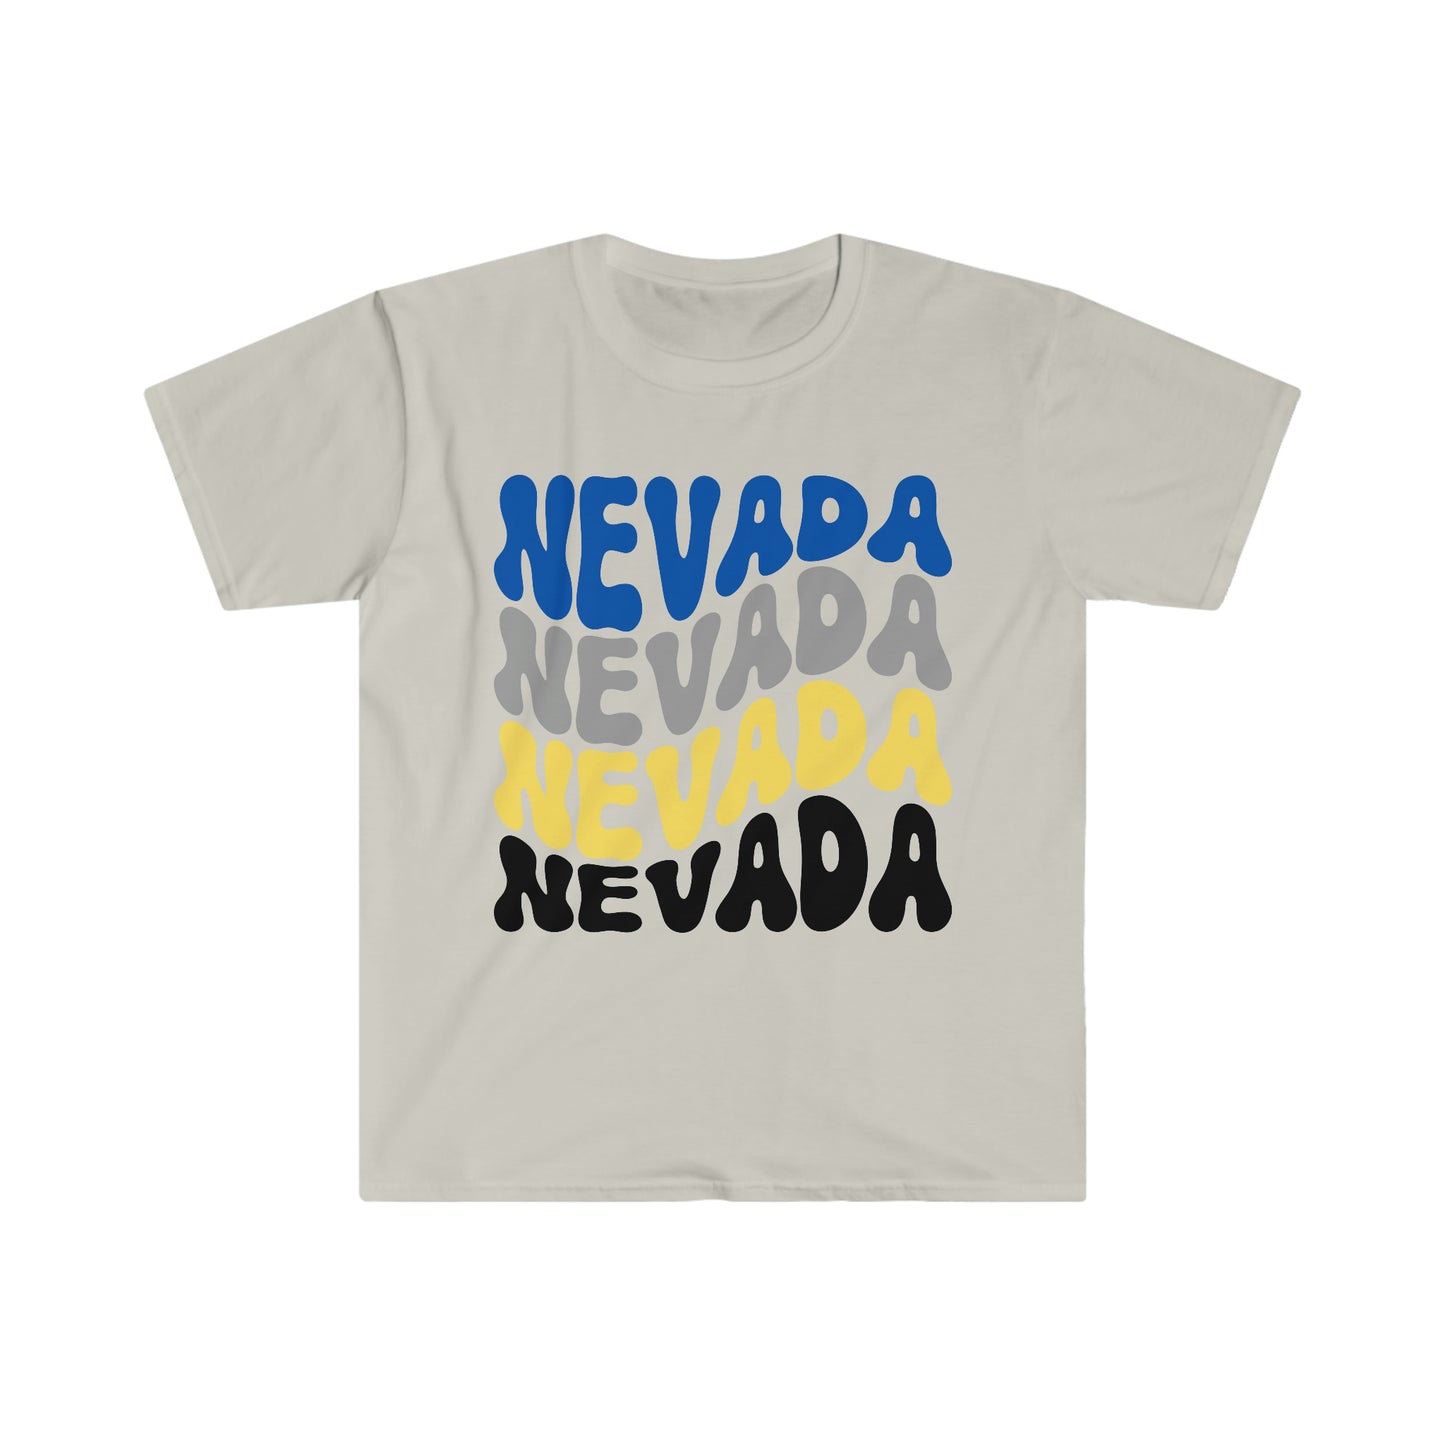 Nevada Shirt | Retro | Groovy Tee